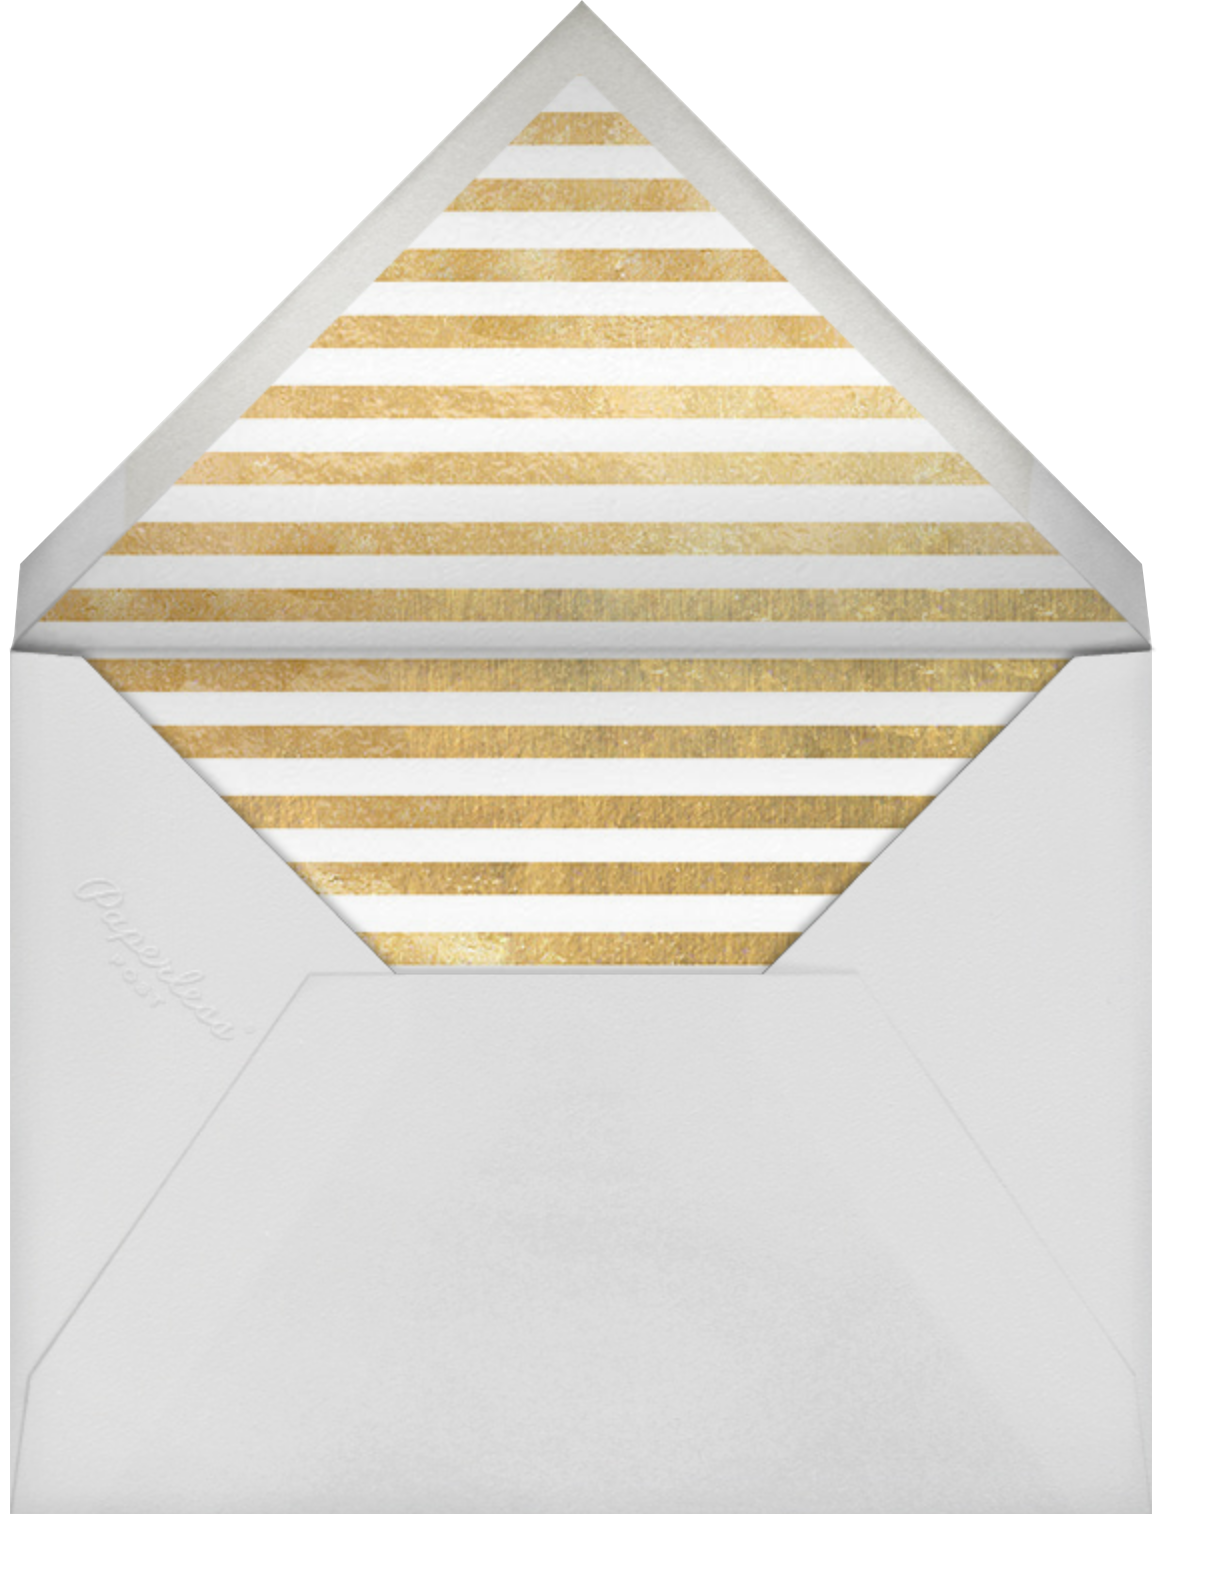 Confetti (Square) - Black - kate spade new york - Envelope